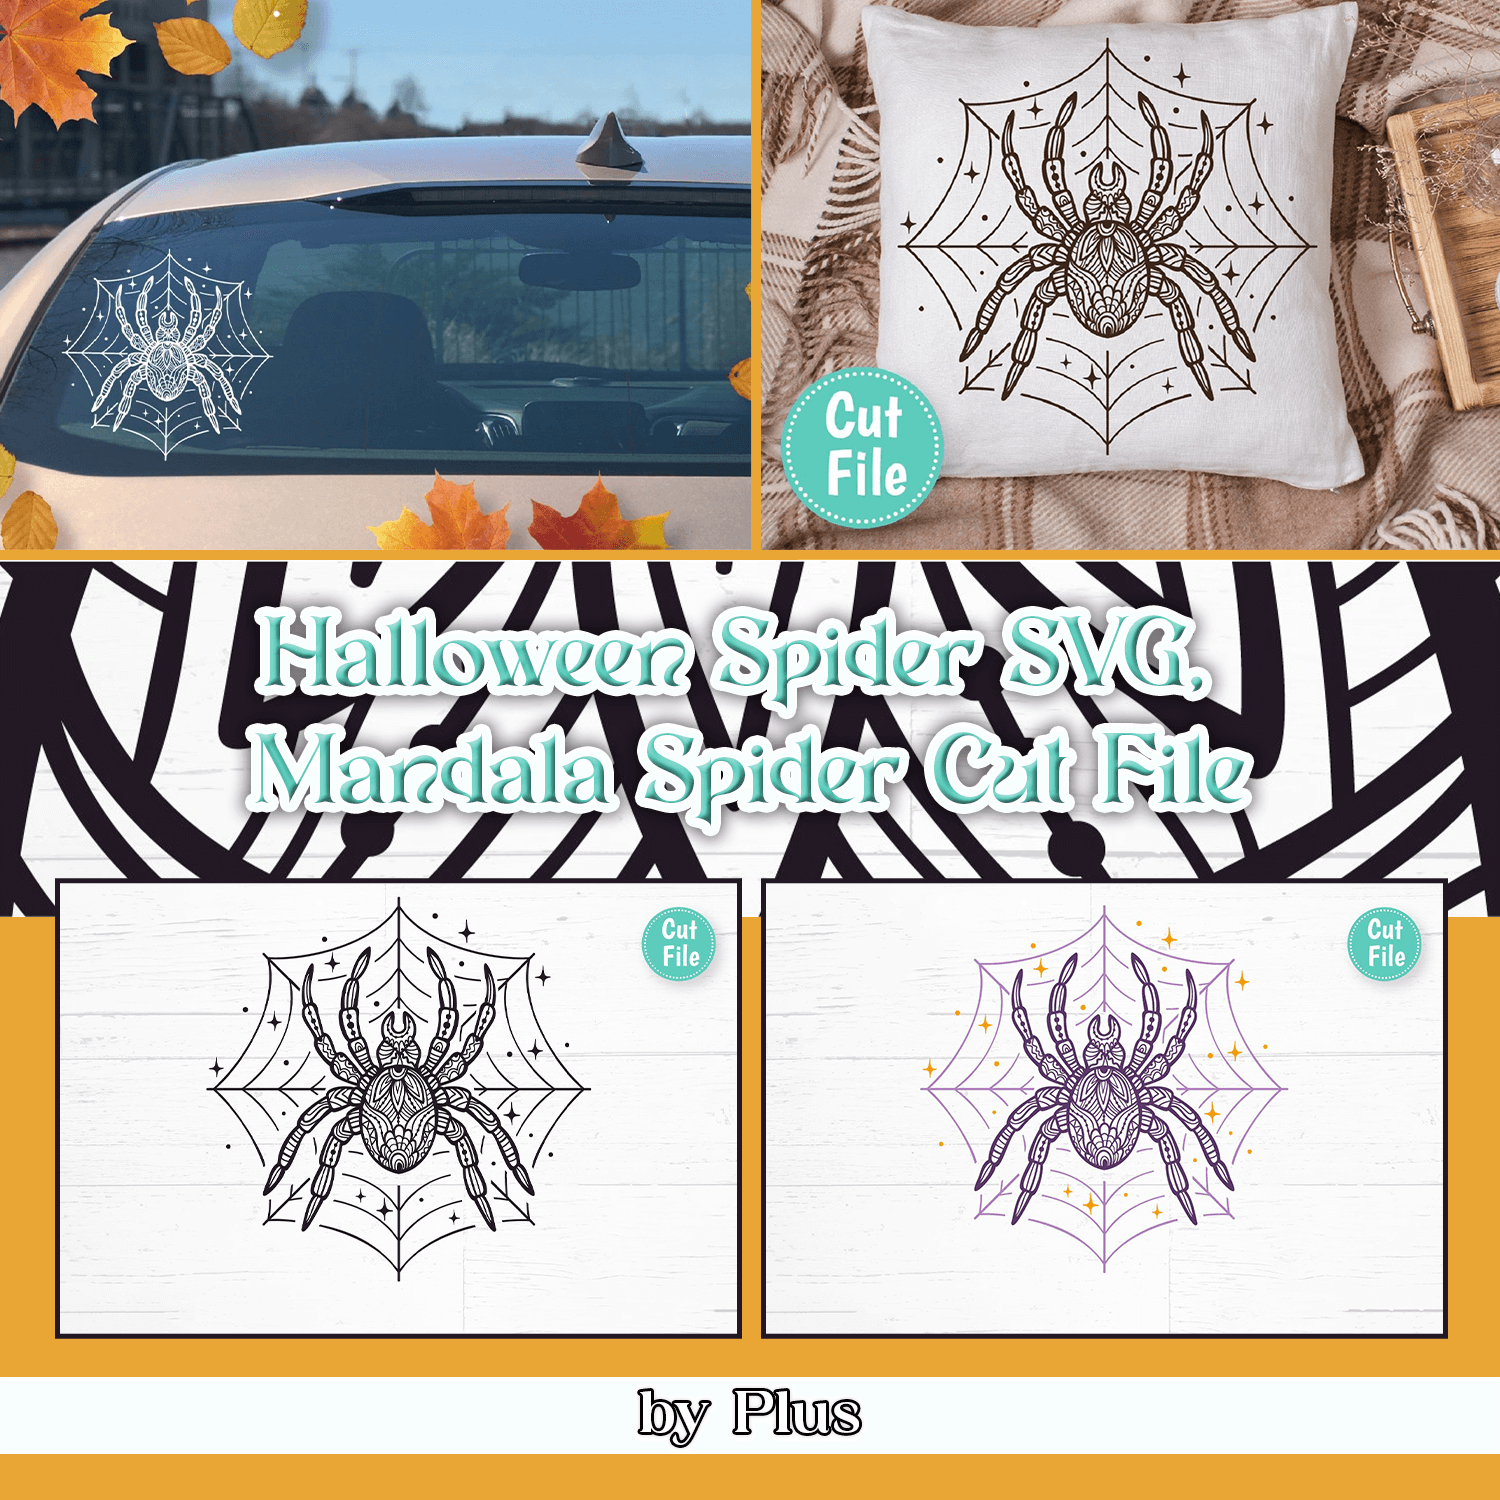 Halloween Spider SVG, Mandala Spider Cut File previews.